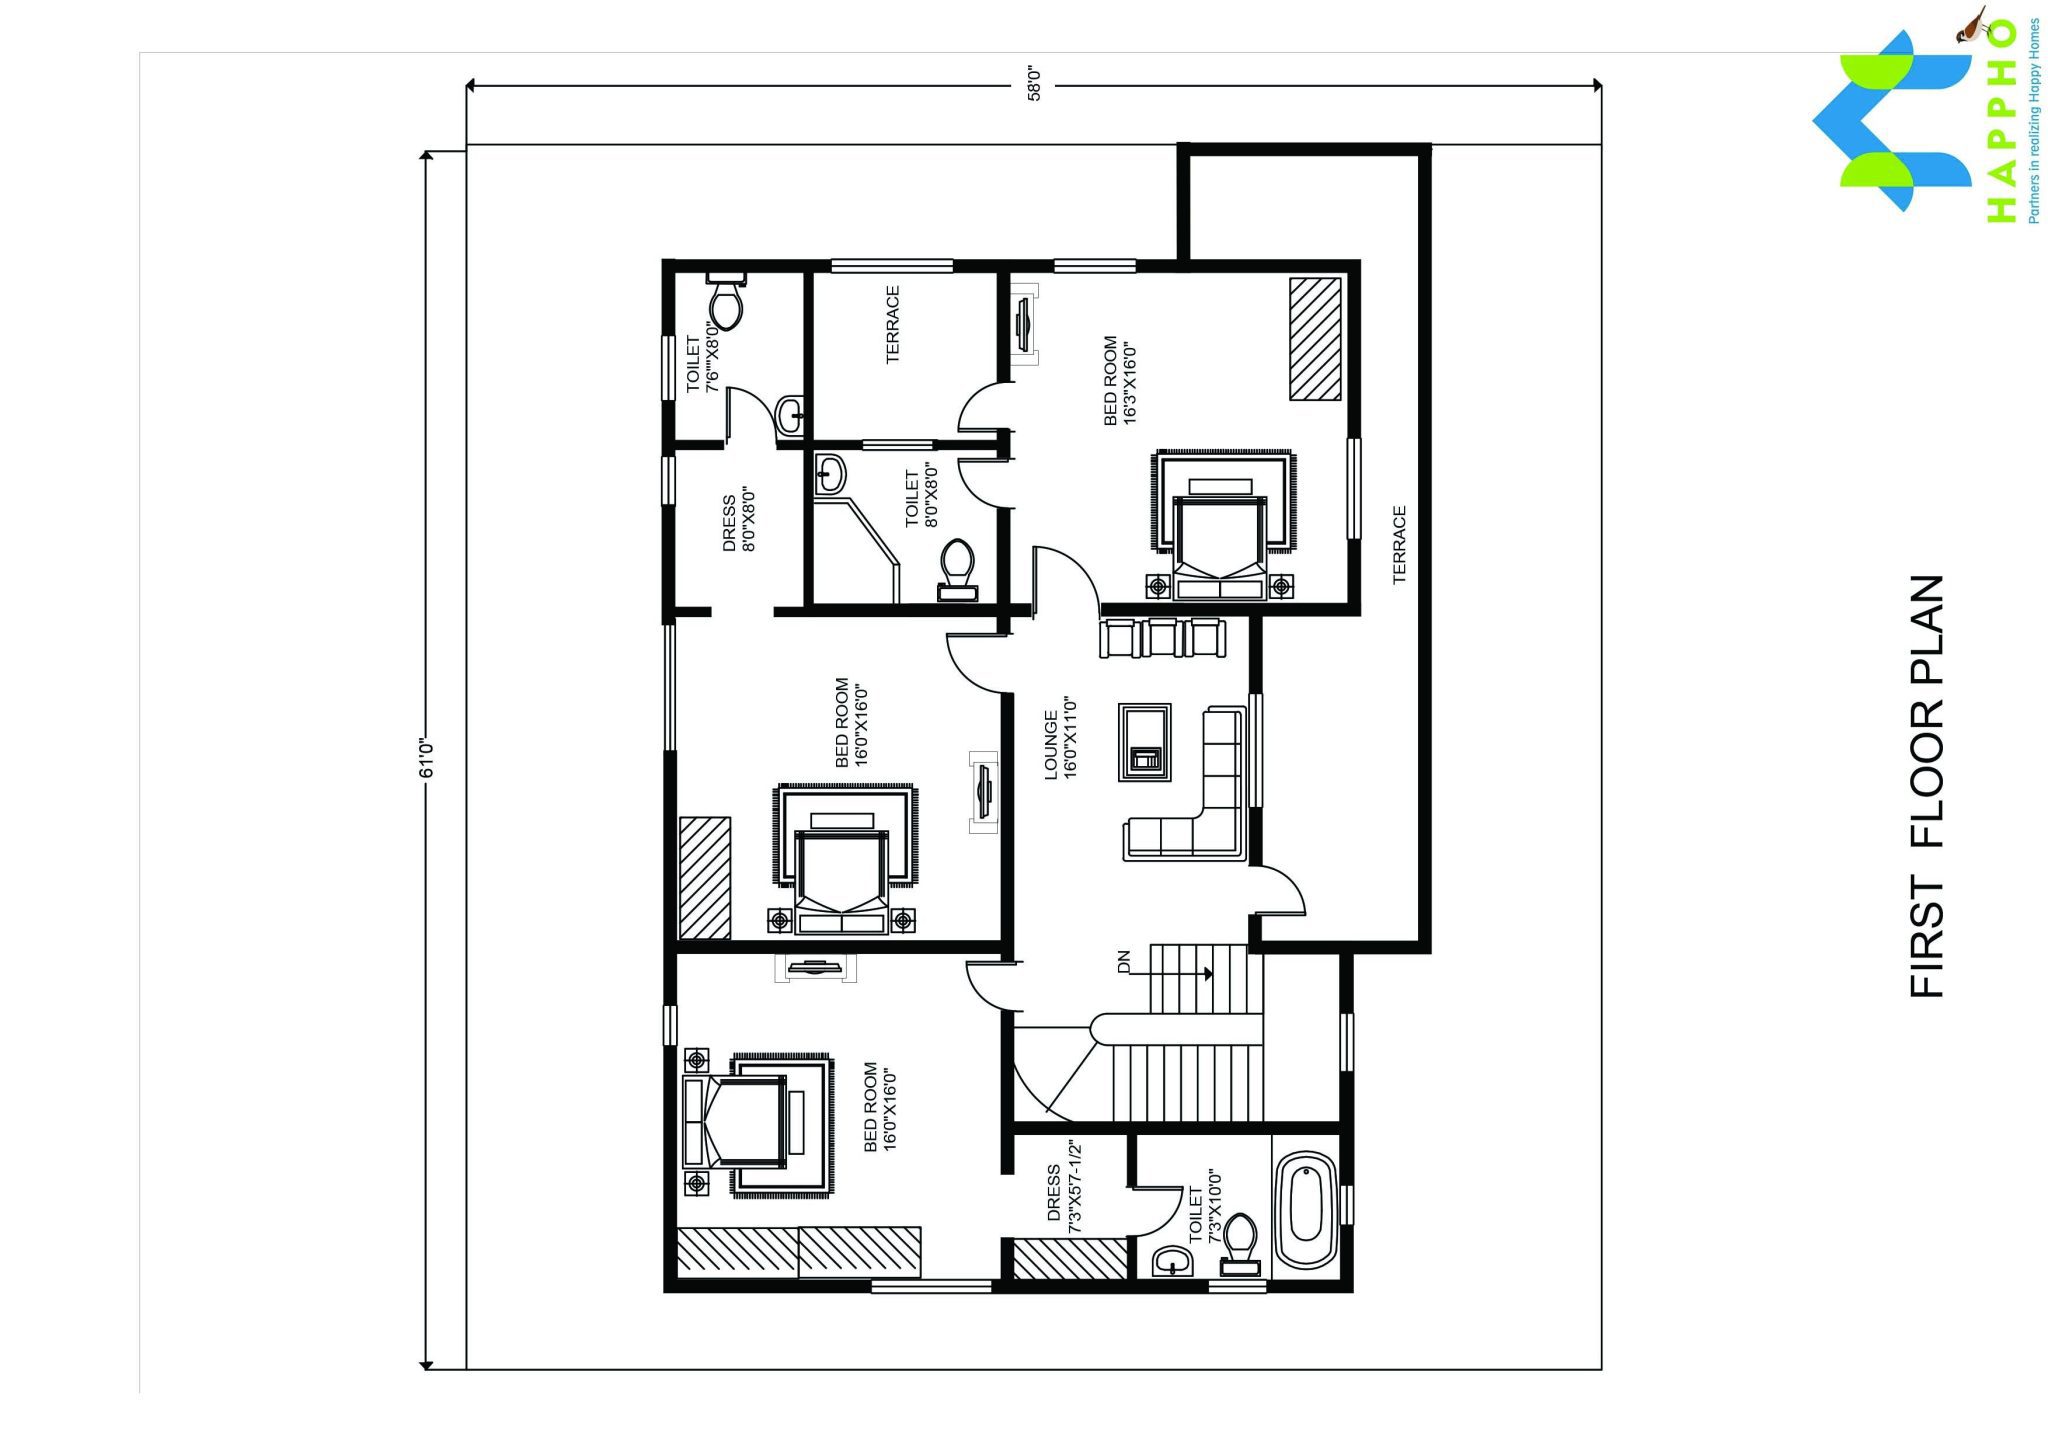 57x61 feet,3477 square feet,379 square yards,Bungalow floor plan